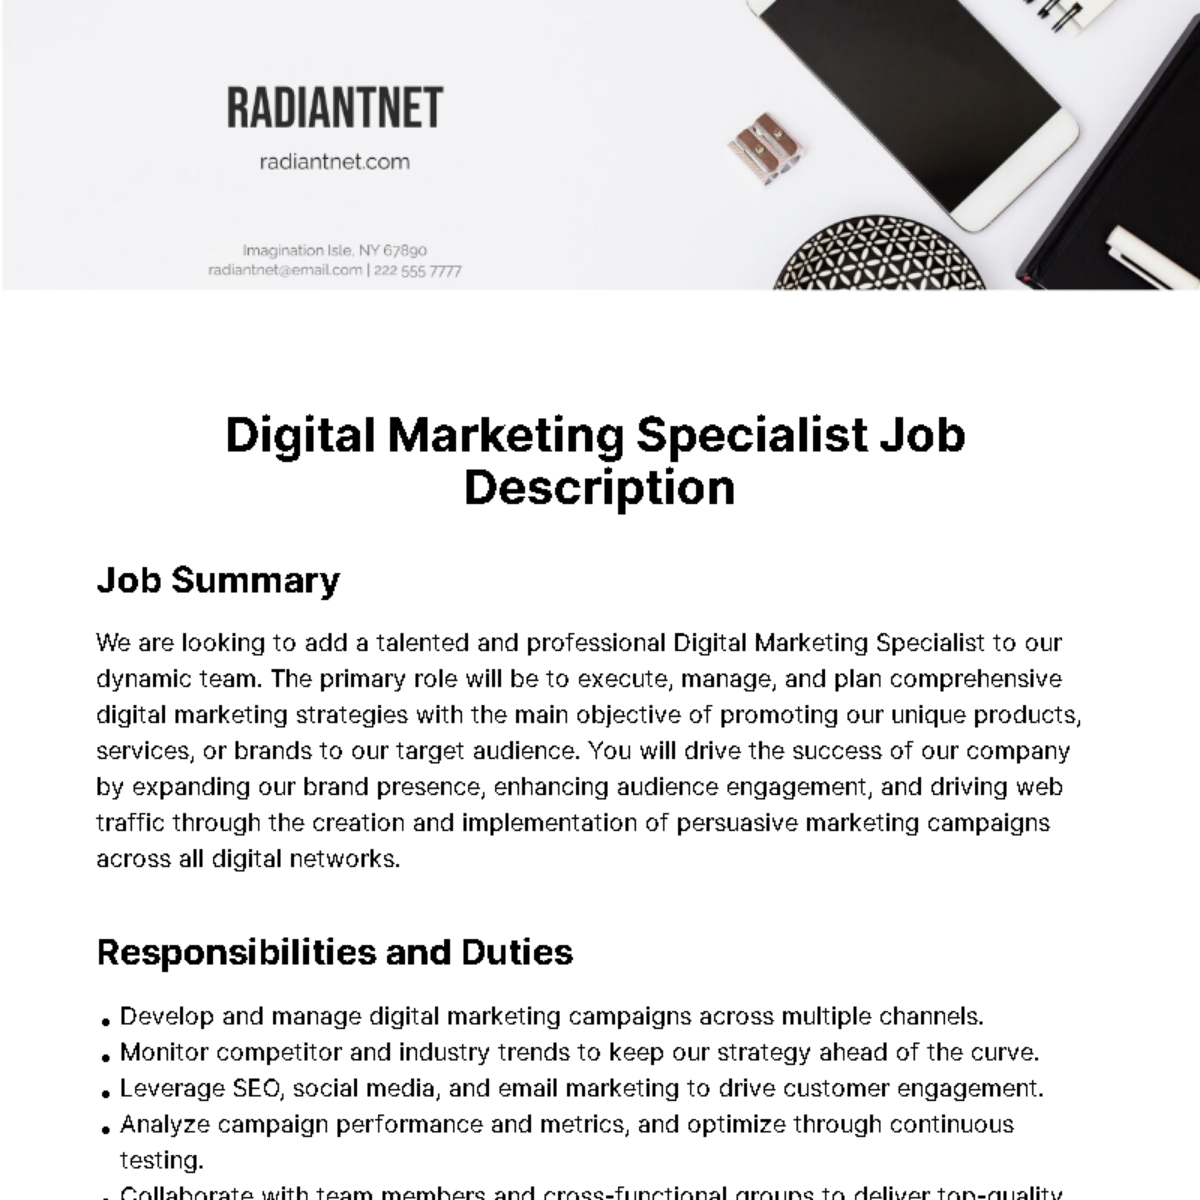 Digital Marketing Specialist Job Description Template